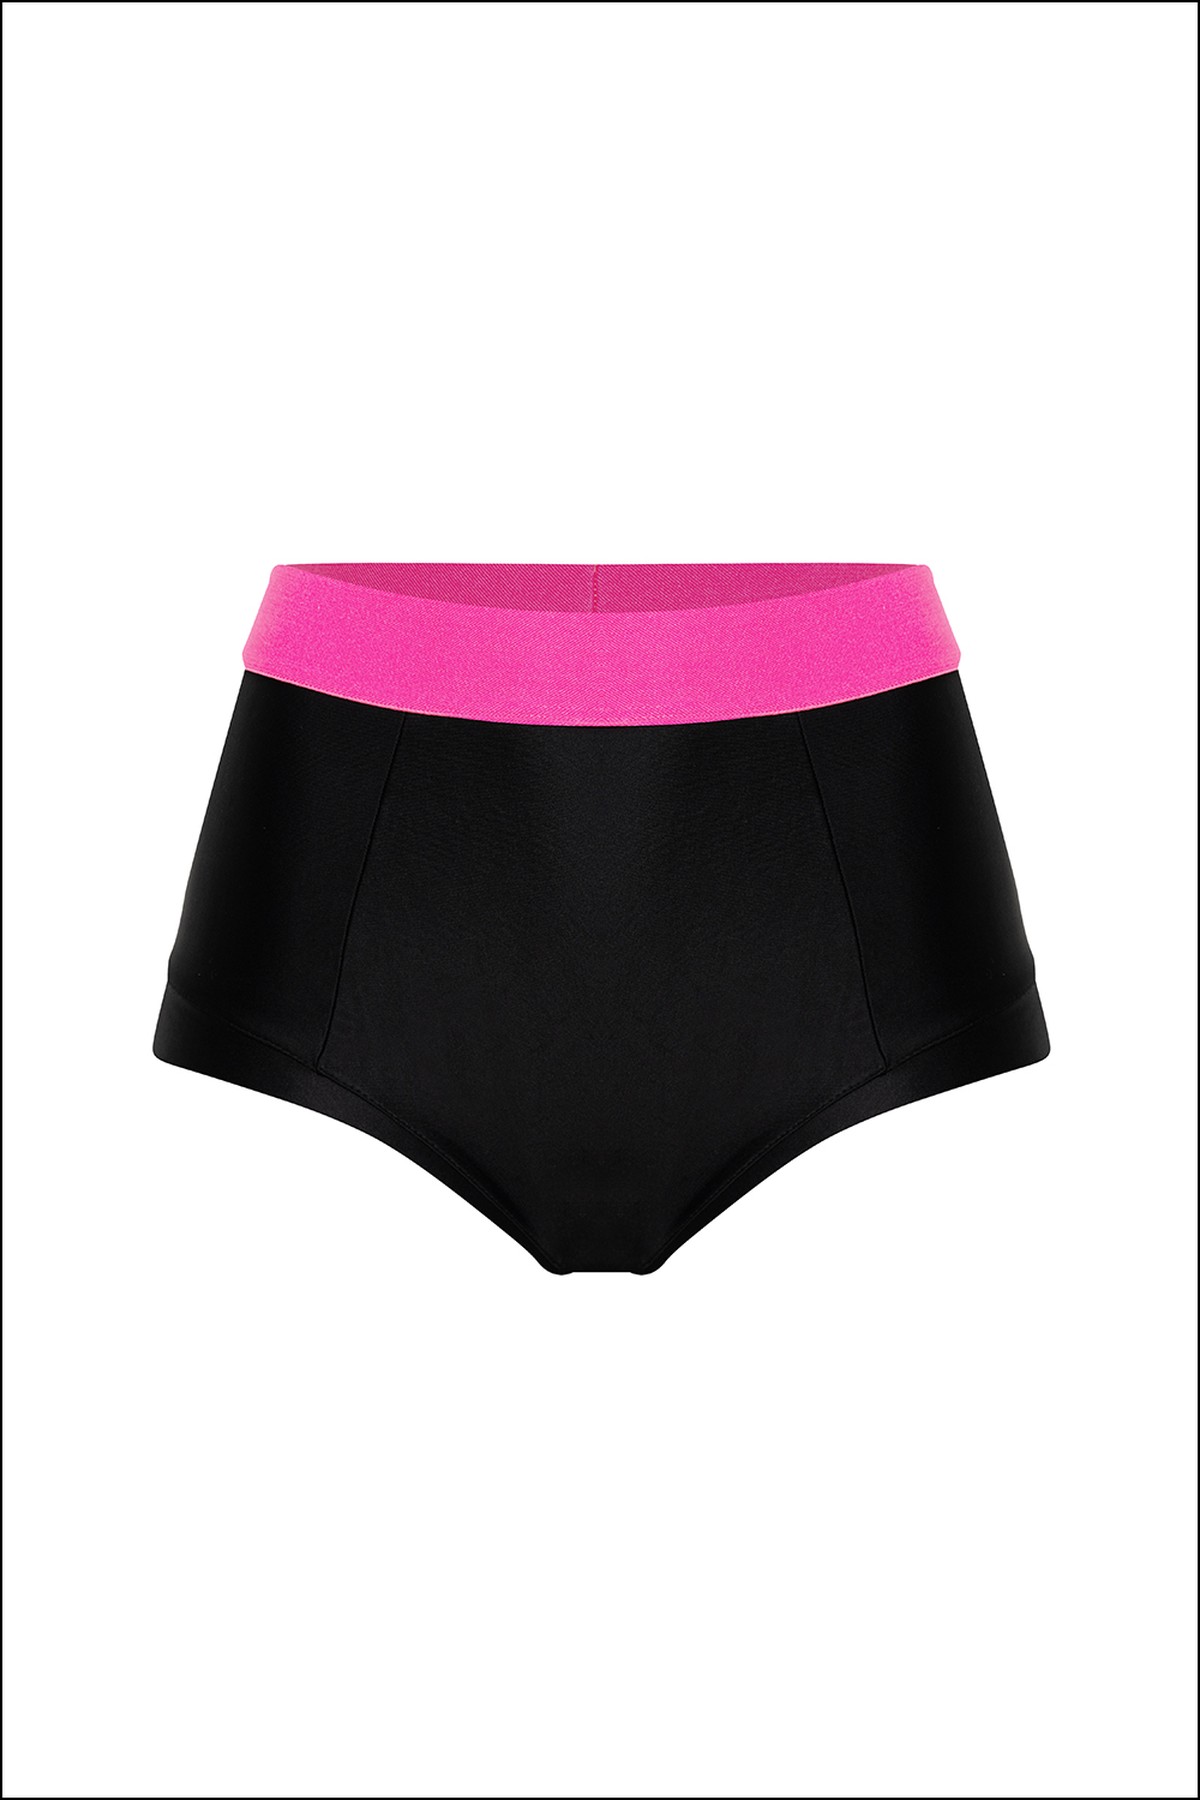 Hot pants detalhe pink neon Maria